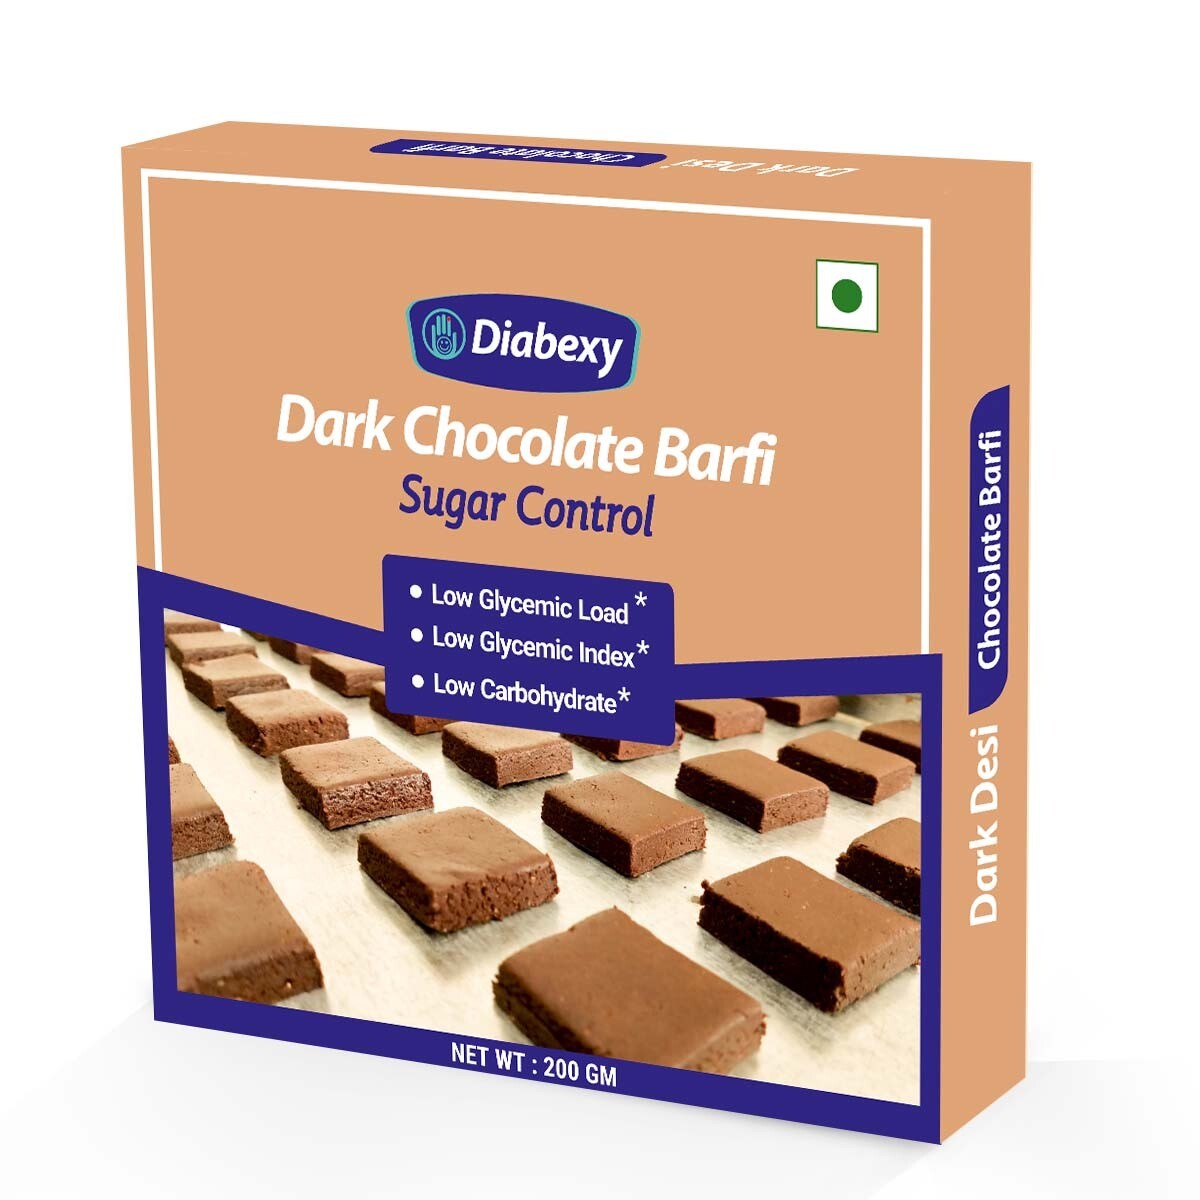 Dark Chocolate Barfi